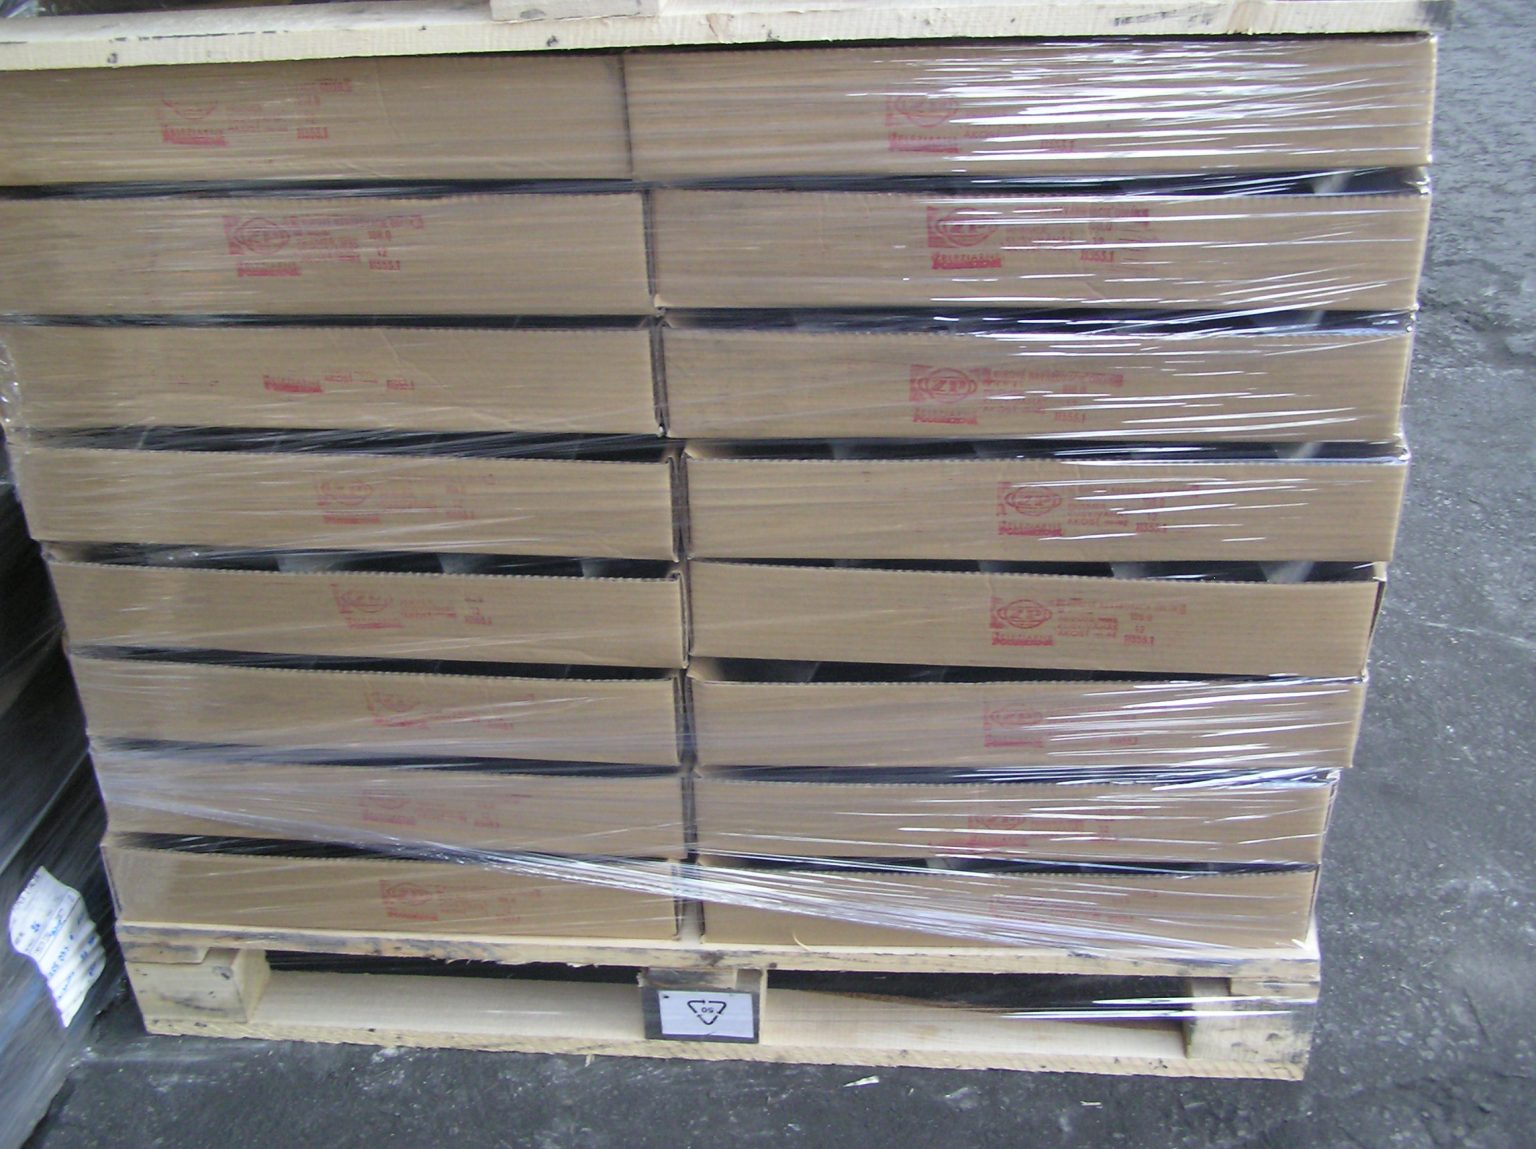 redukciePackaking in cardboard boxes put on wooden pallets